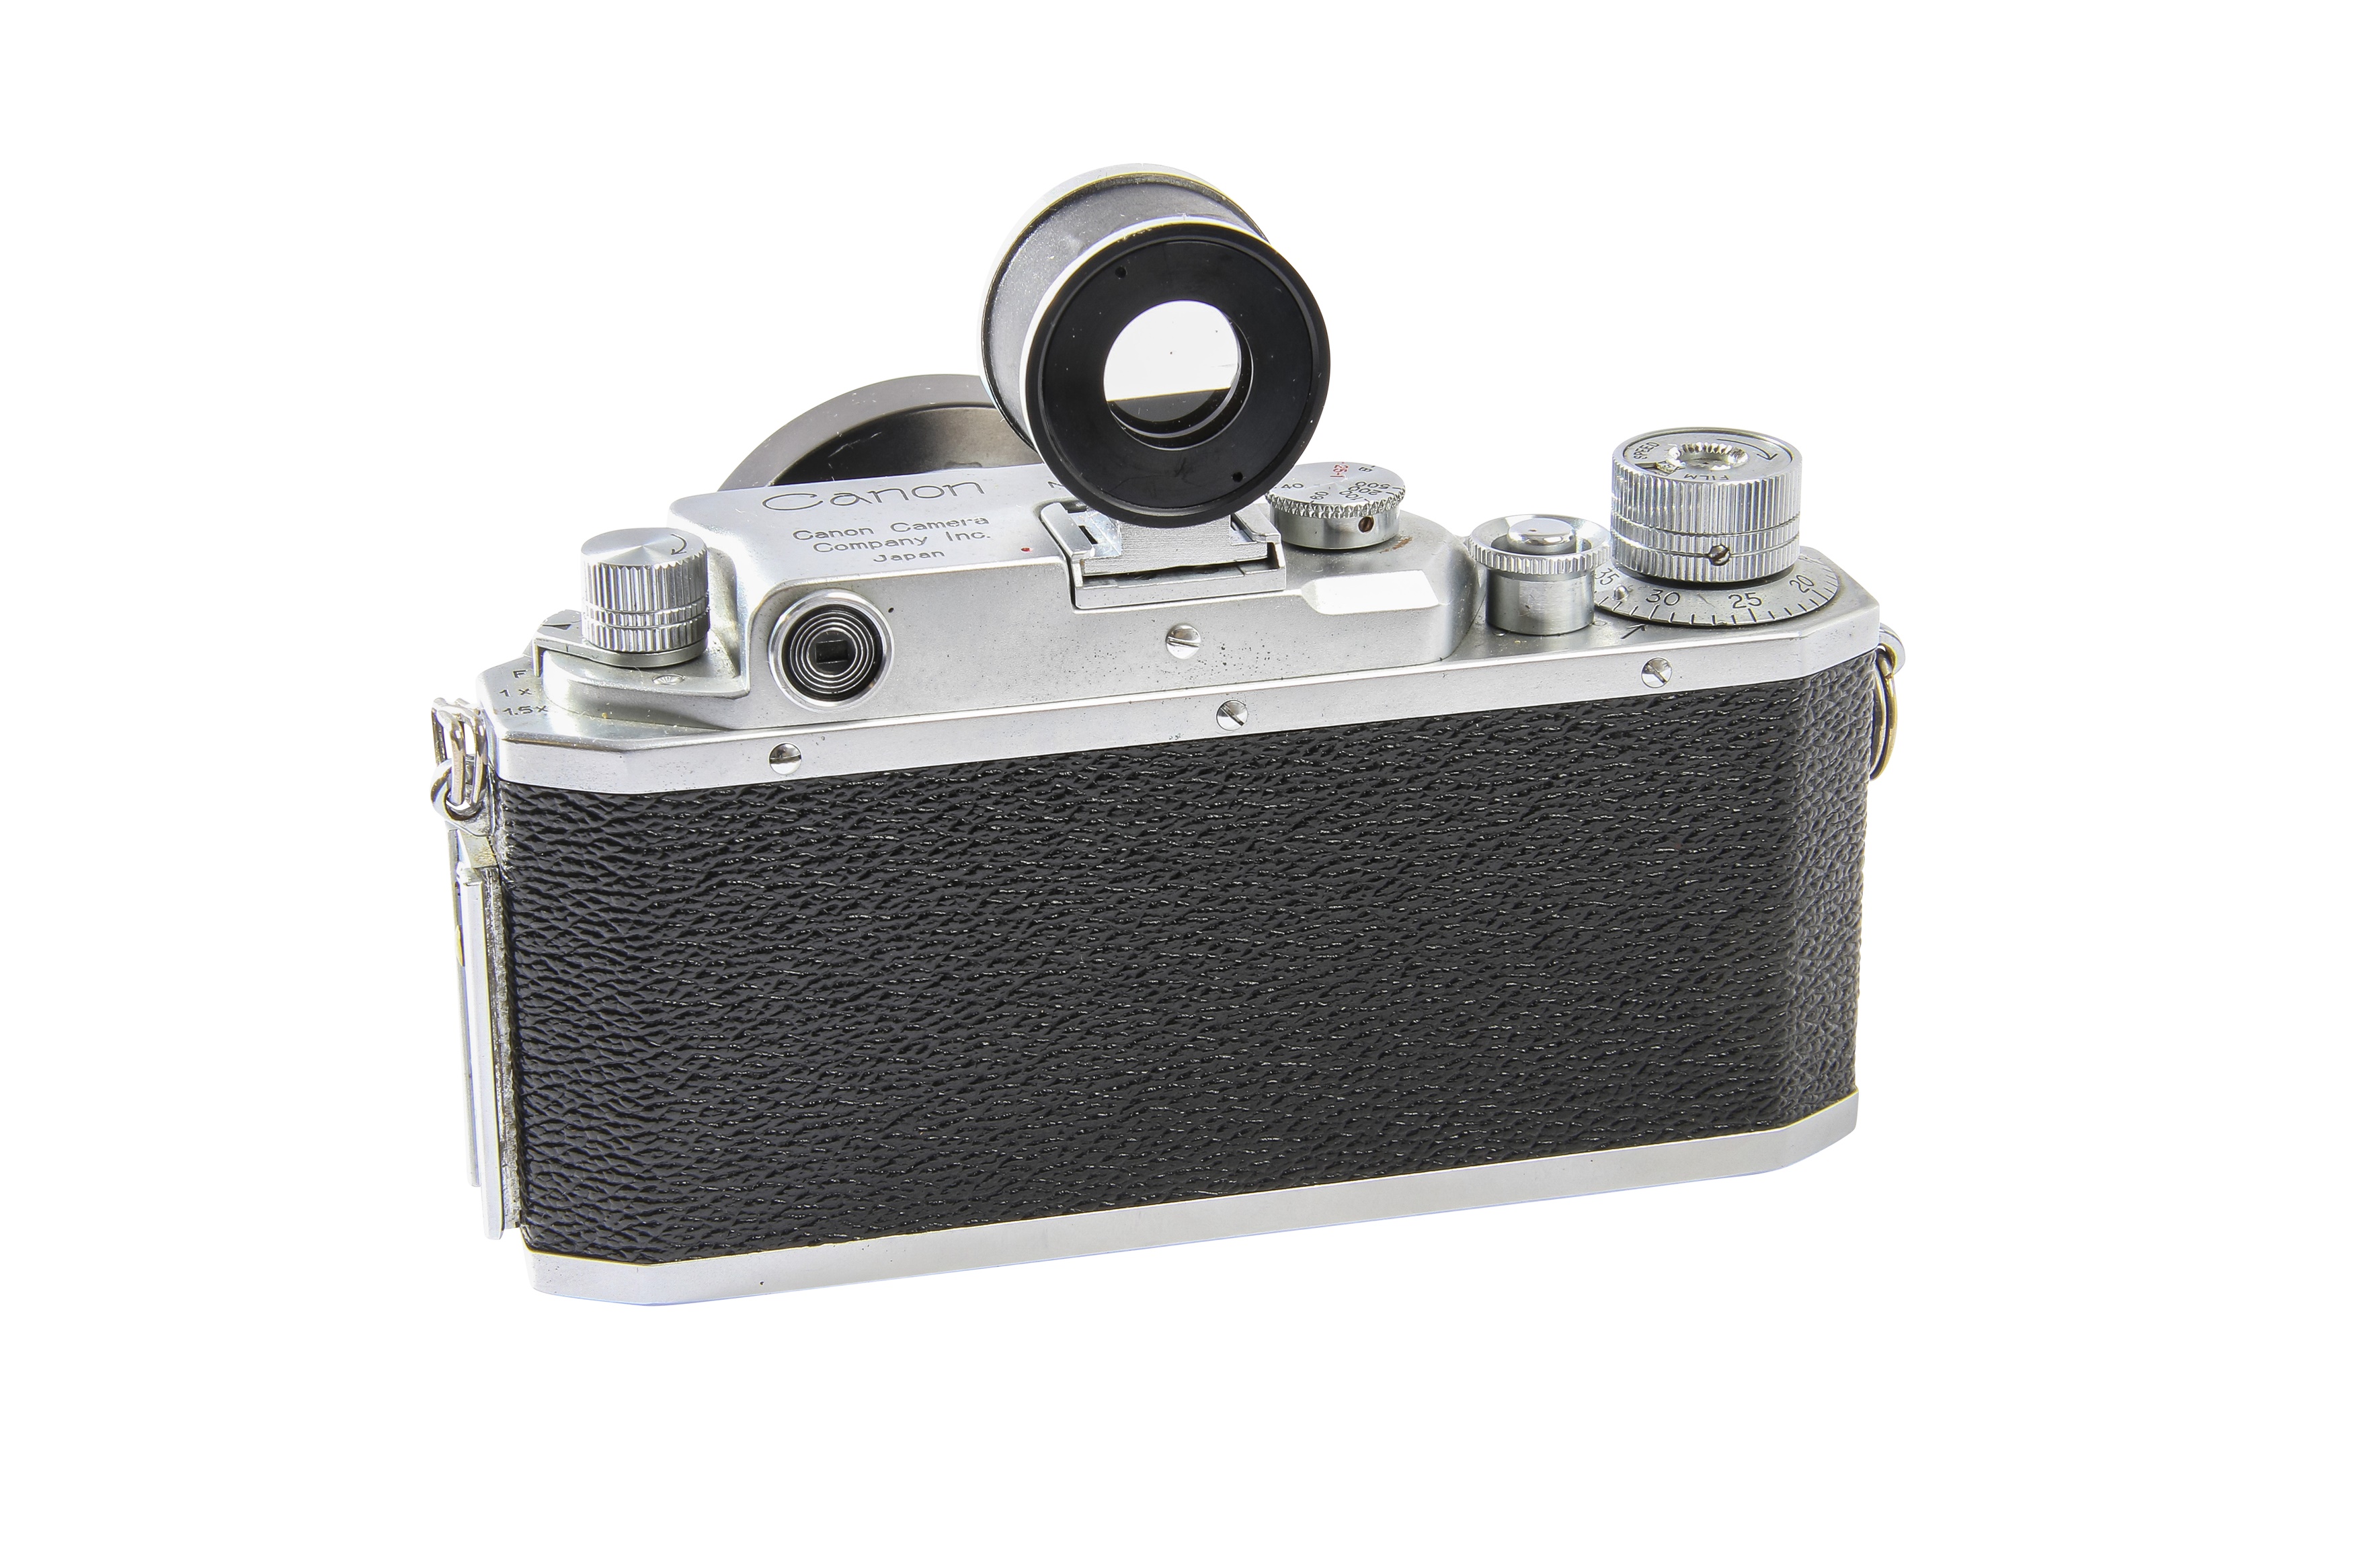 Canon S-II Rangefinder & Accessories. - Image 2 of 3